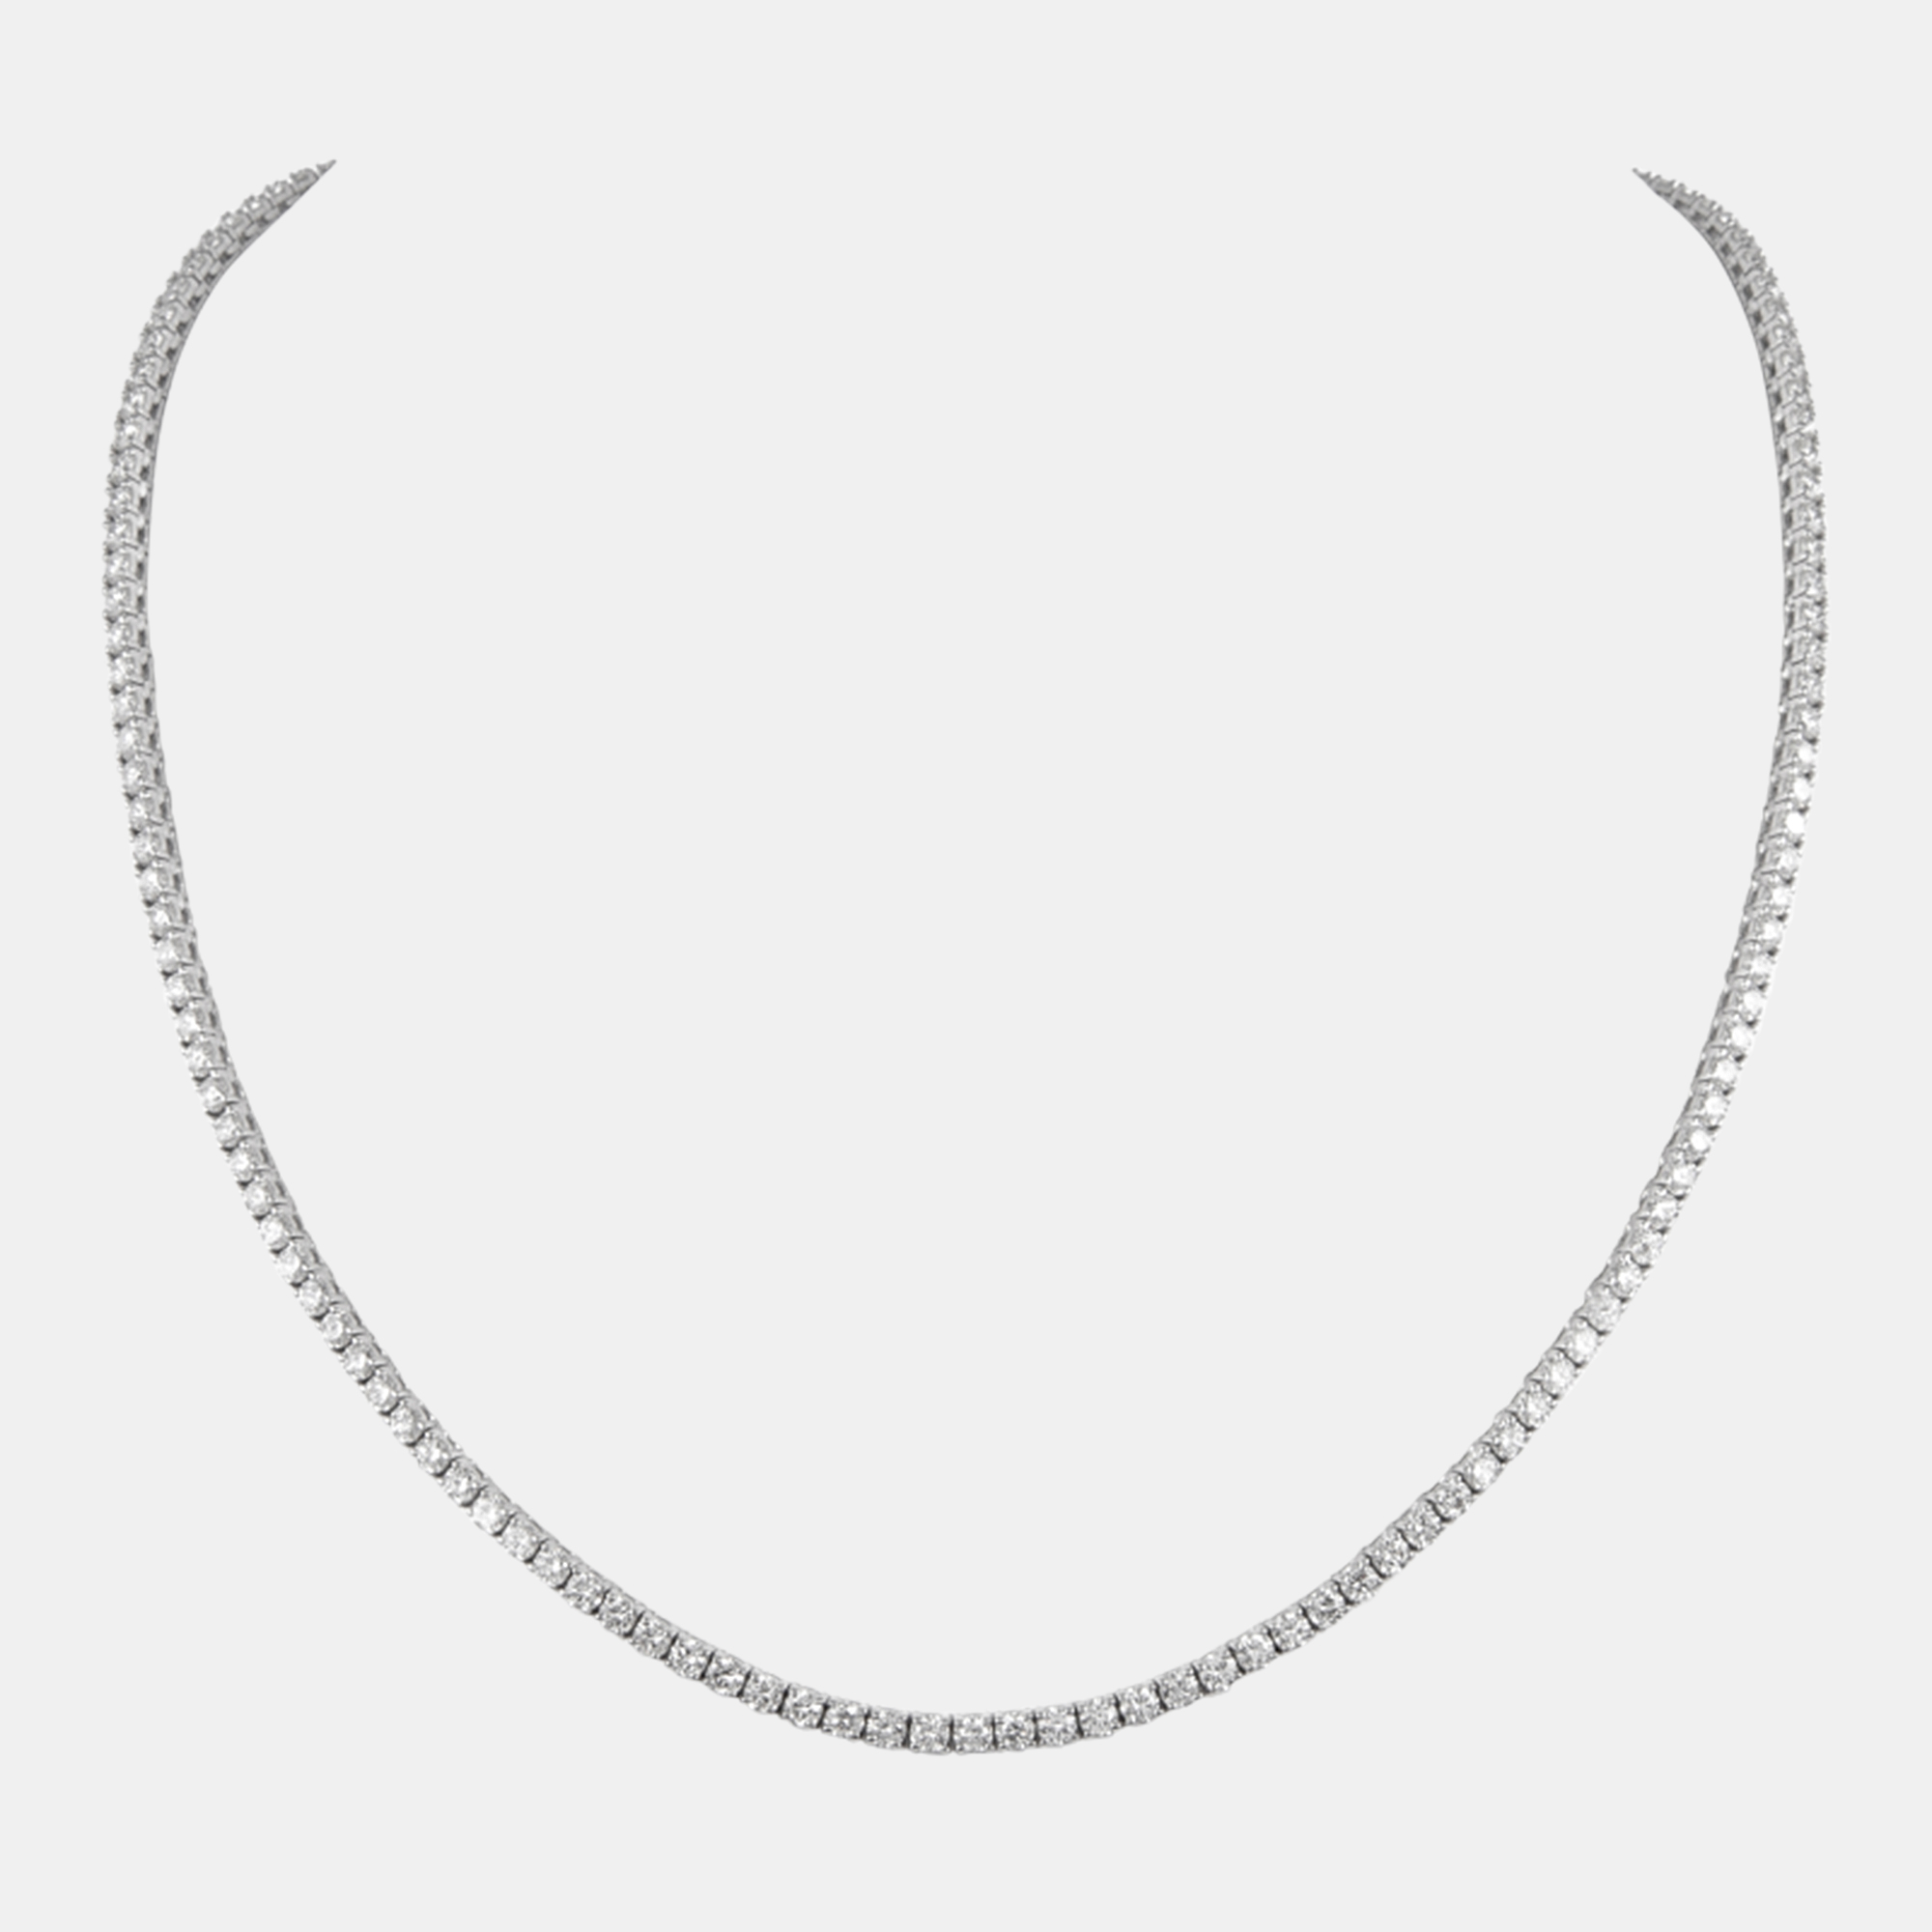 The diamond edit 18k white gold diamond 0.10 ct. (each) tennis necklace